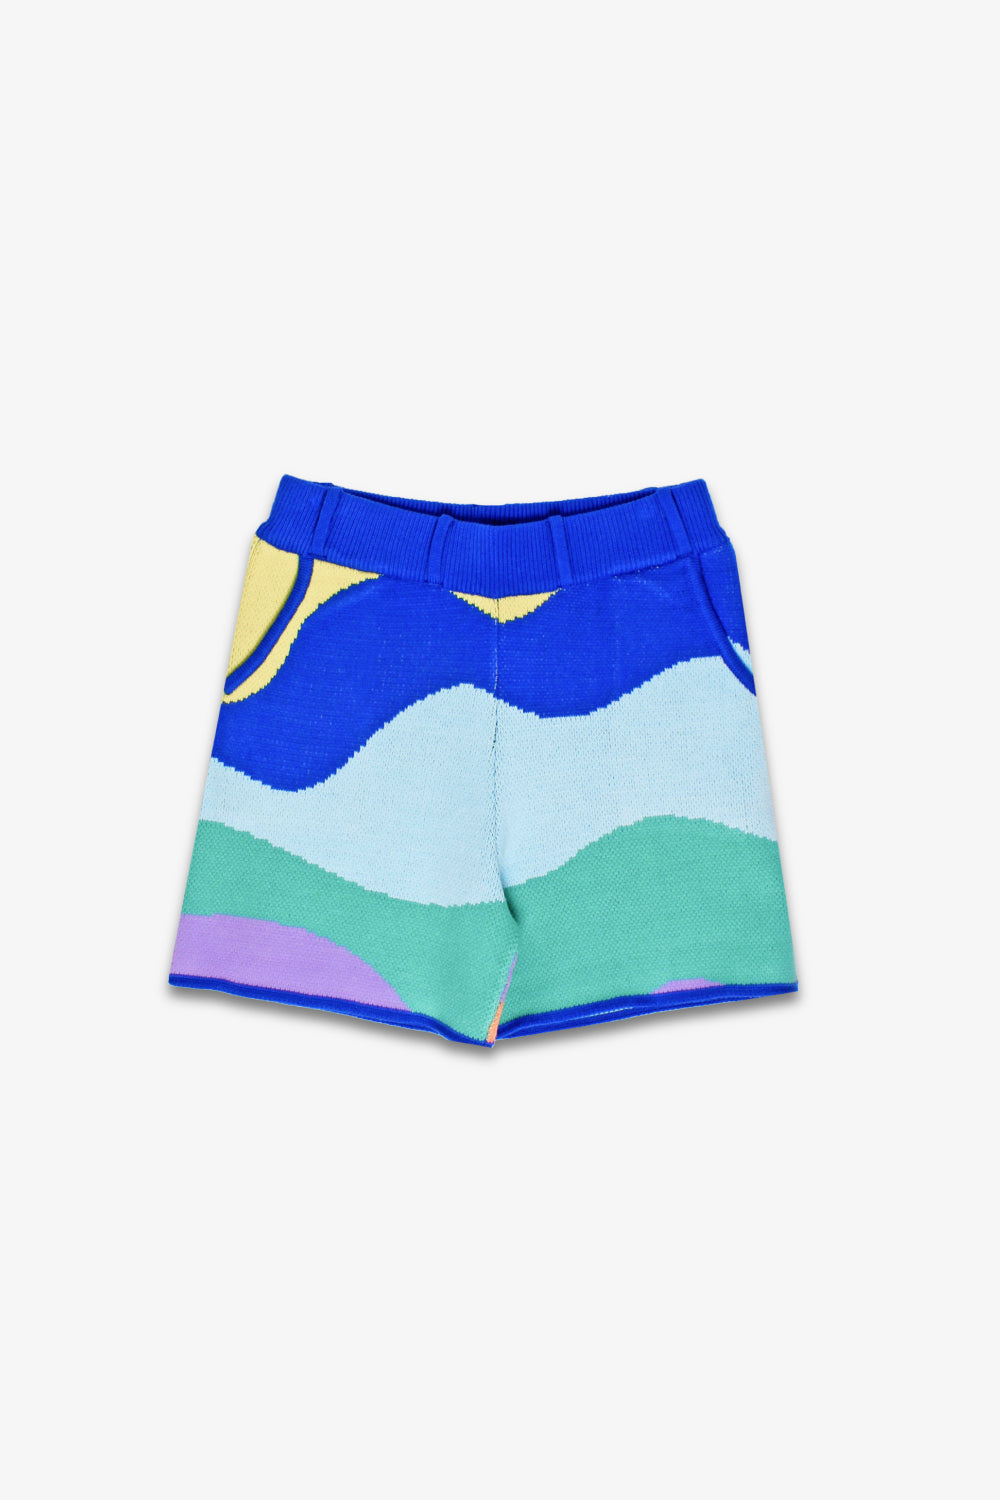 Ocean Wave Shorts